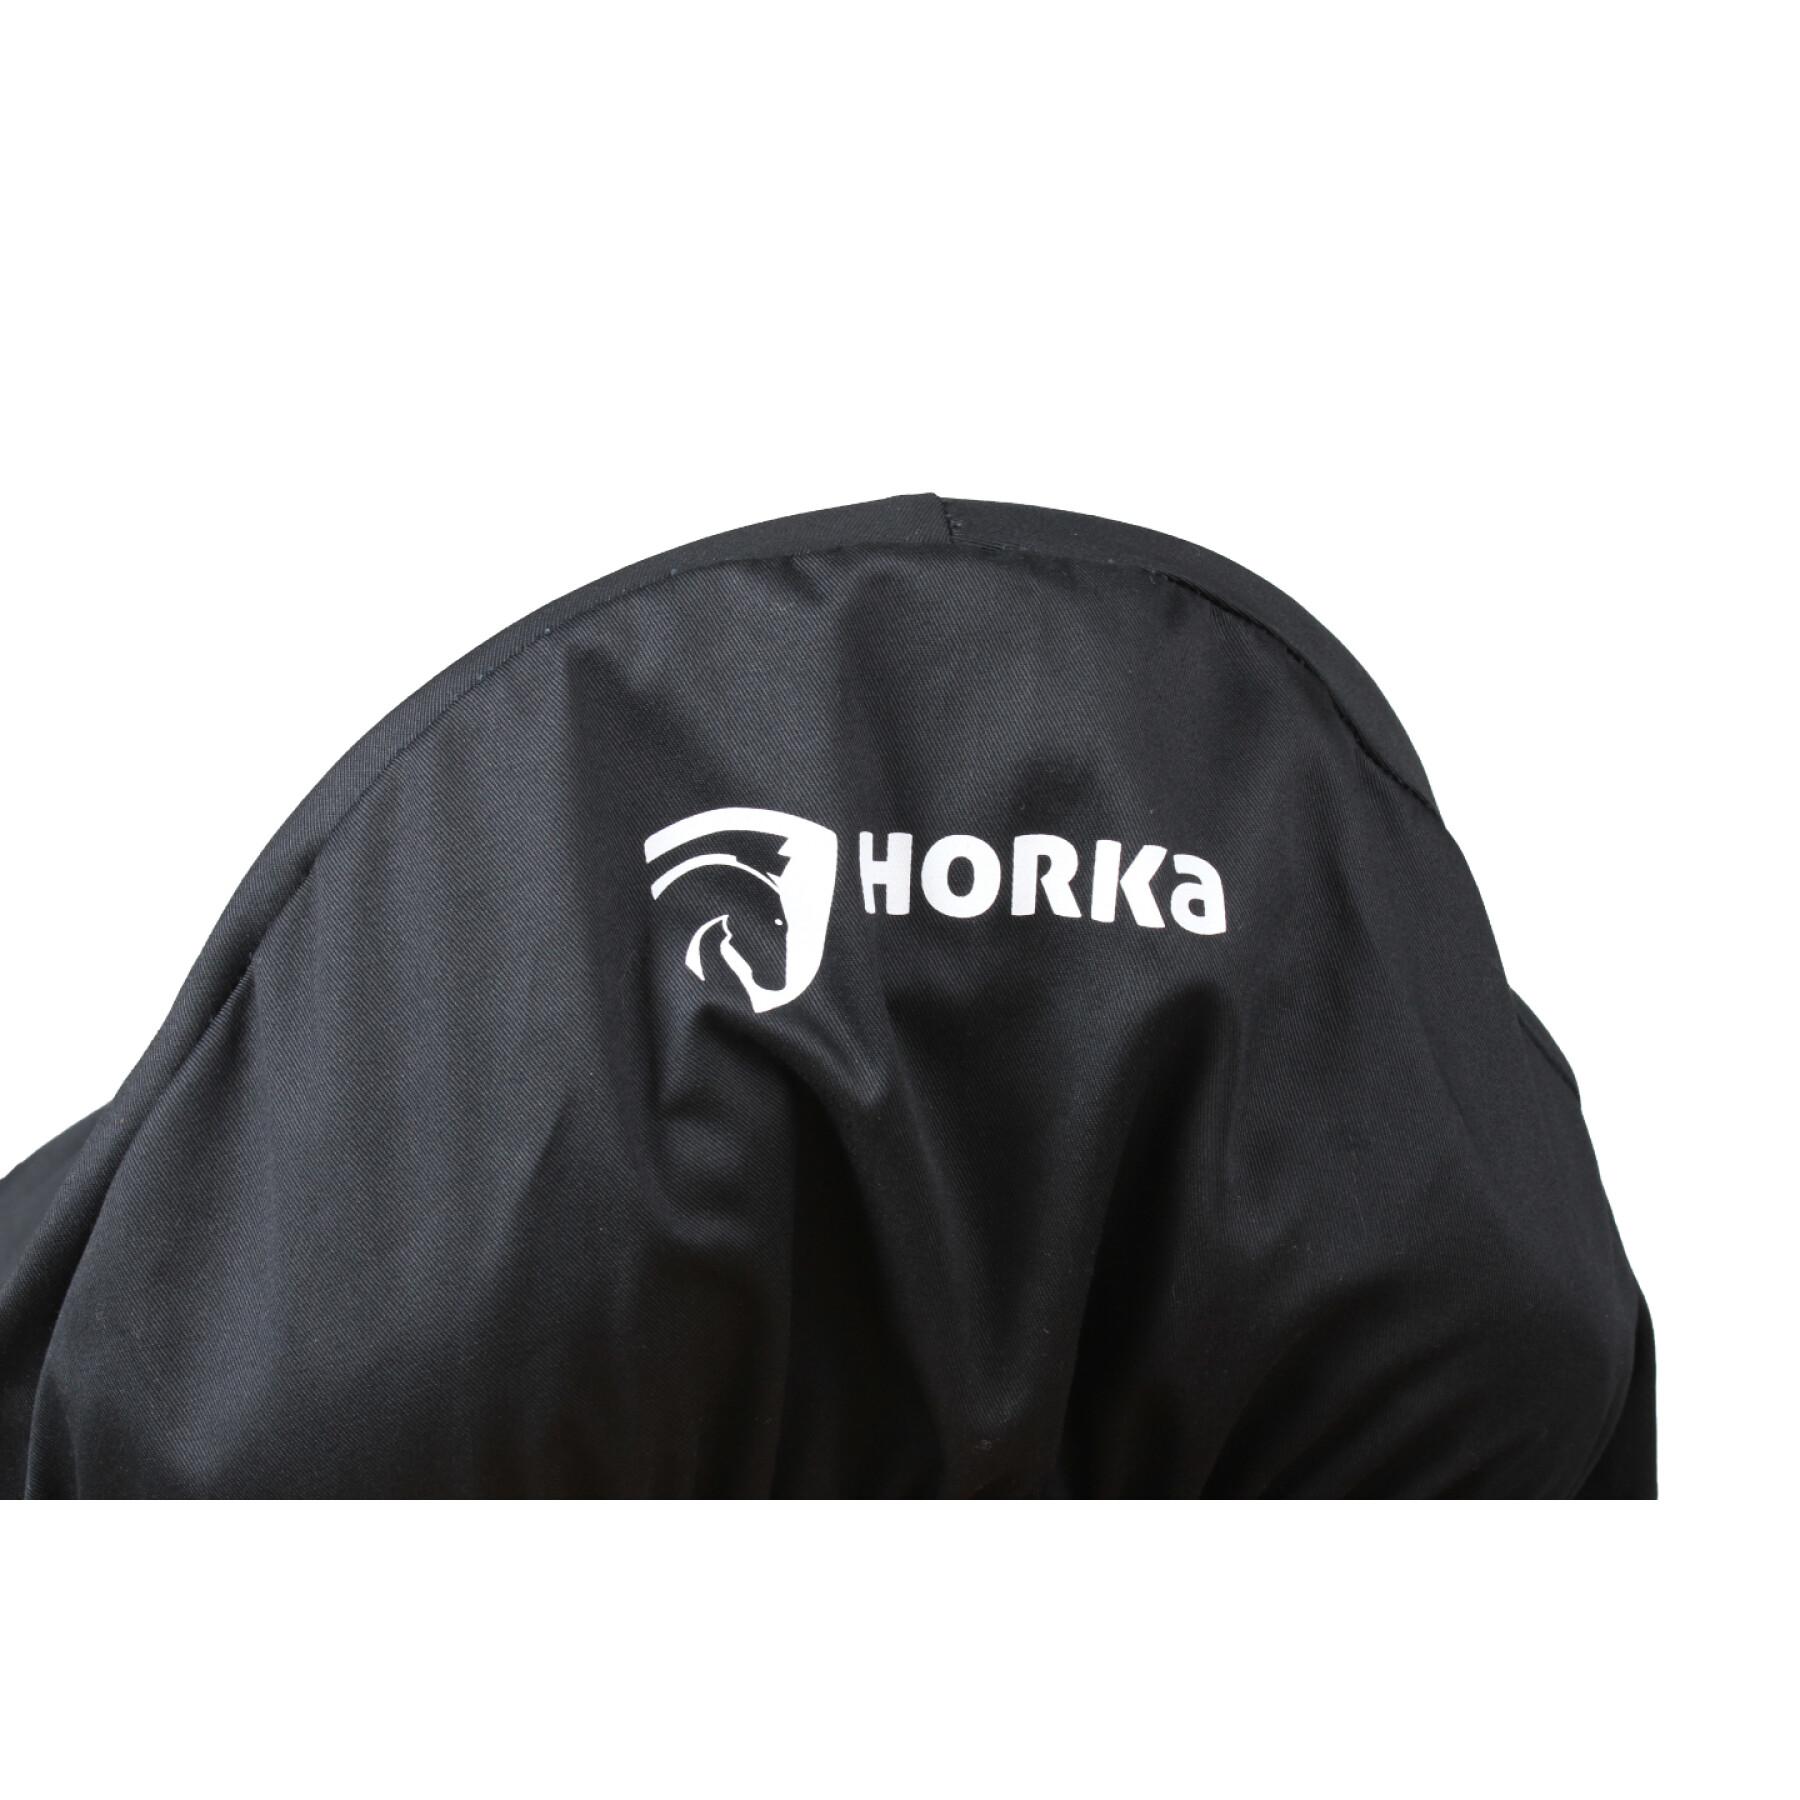 Horse saddle cover with logo's Horka